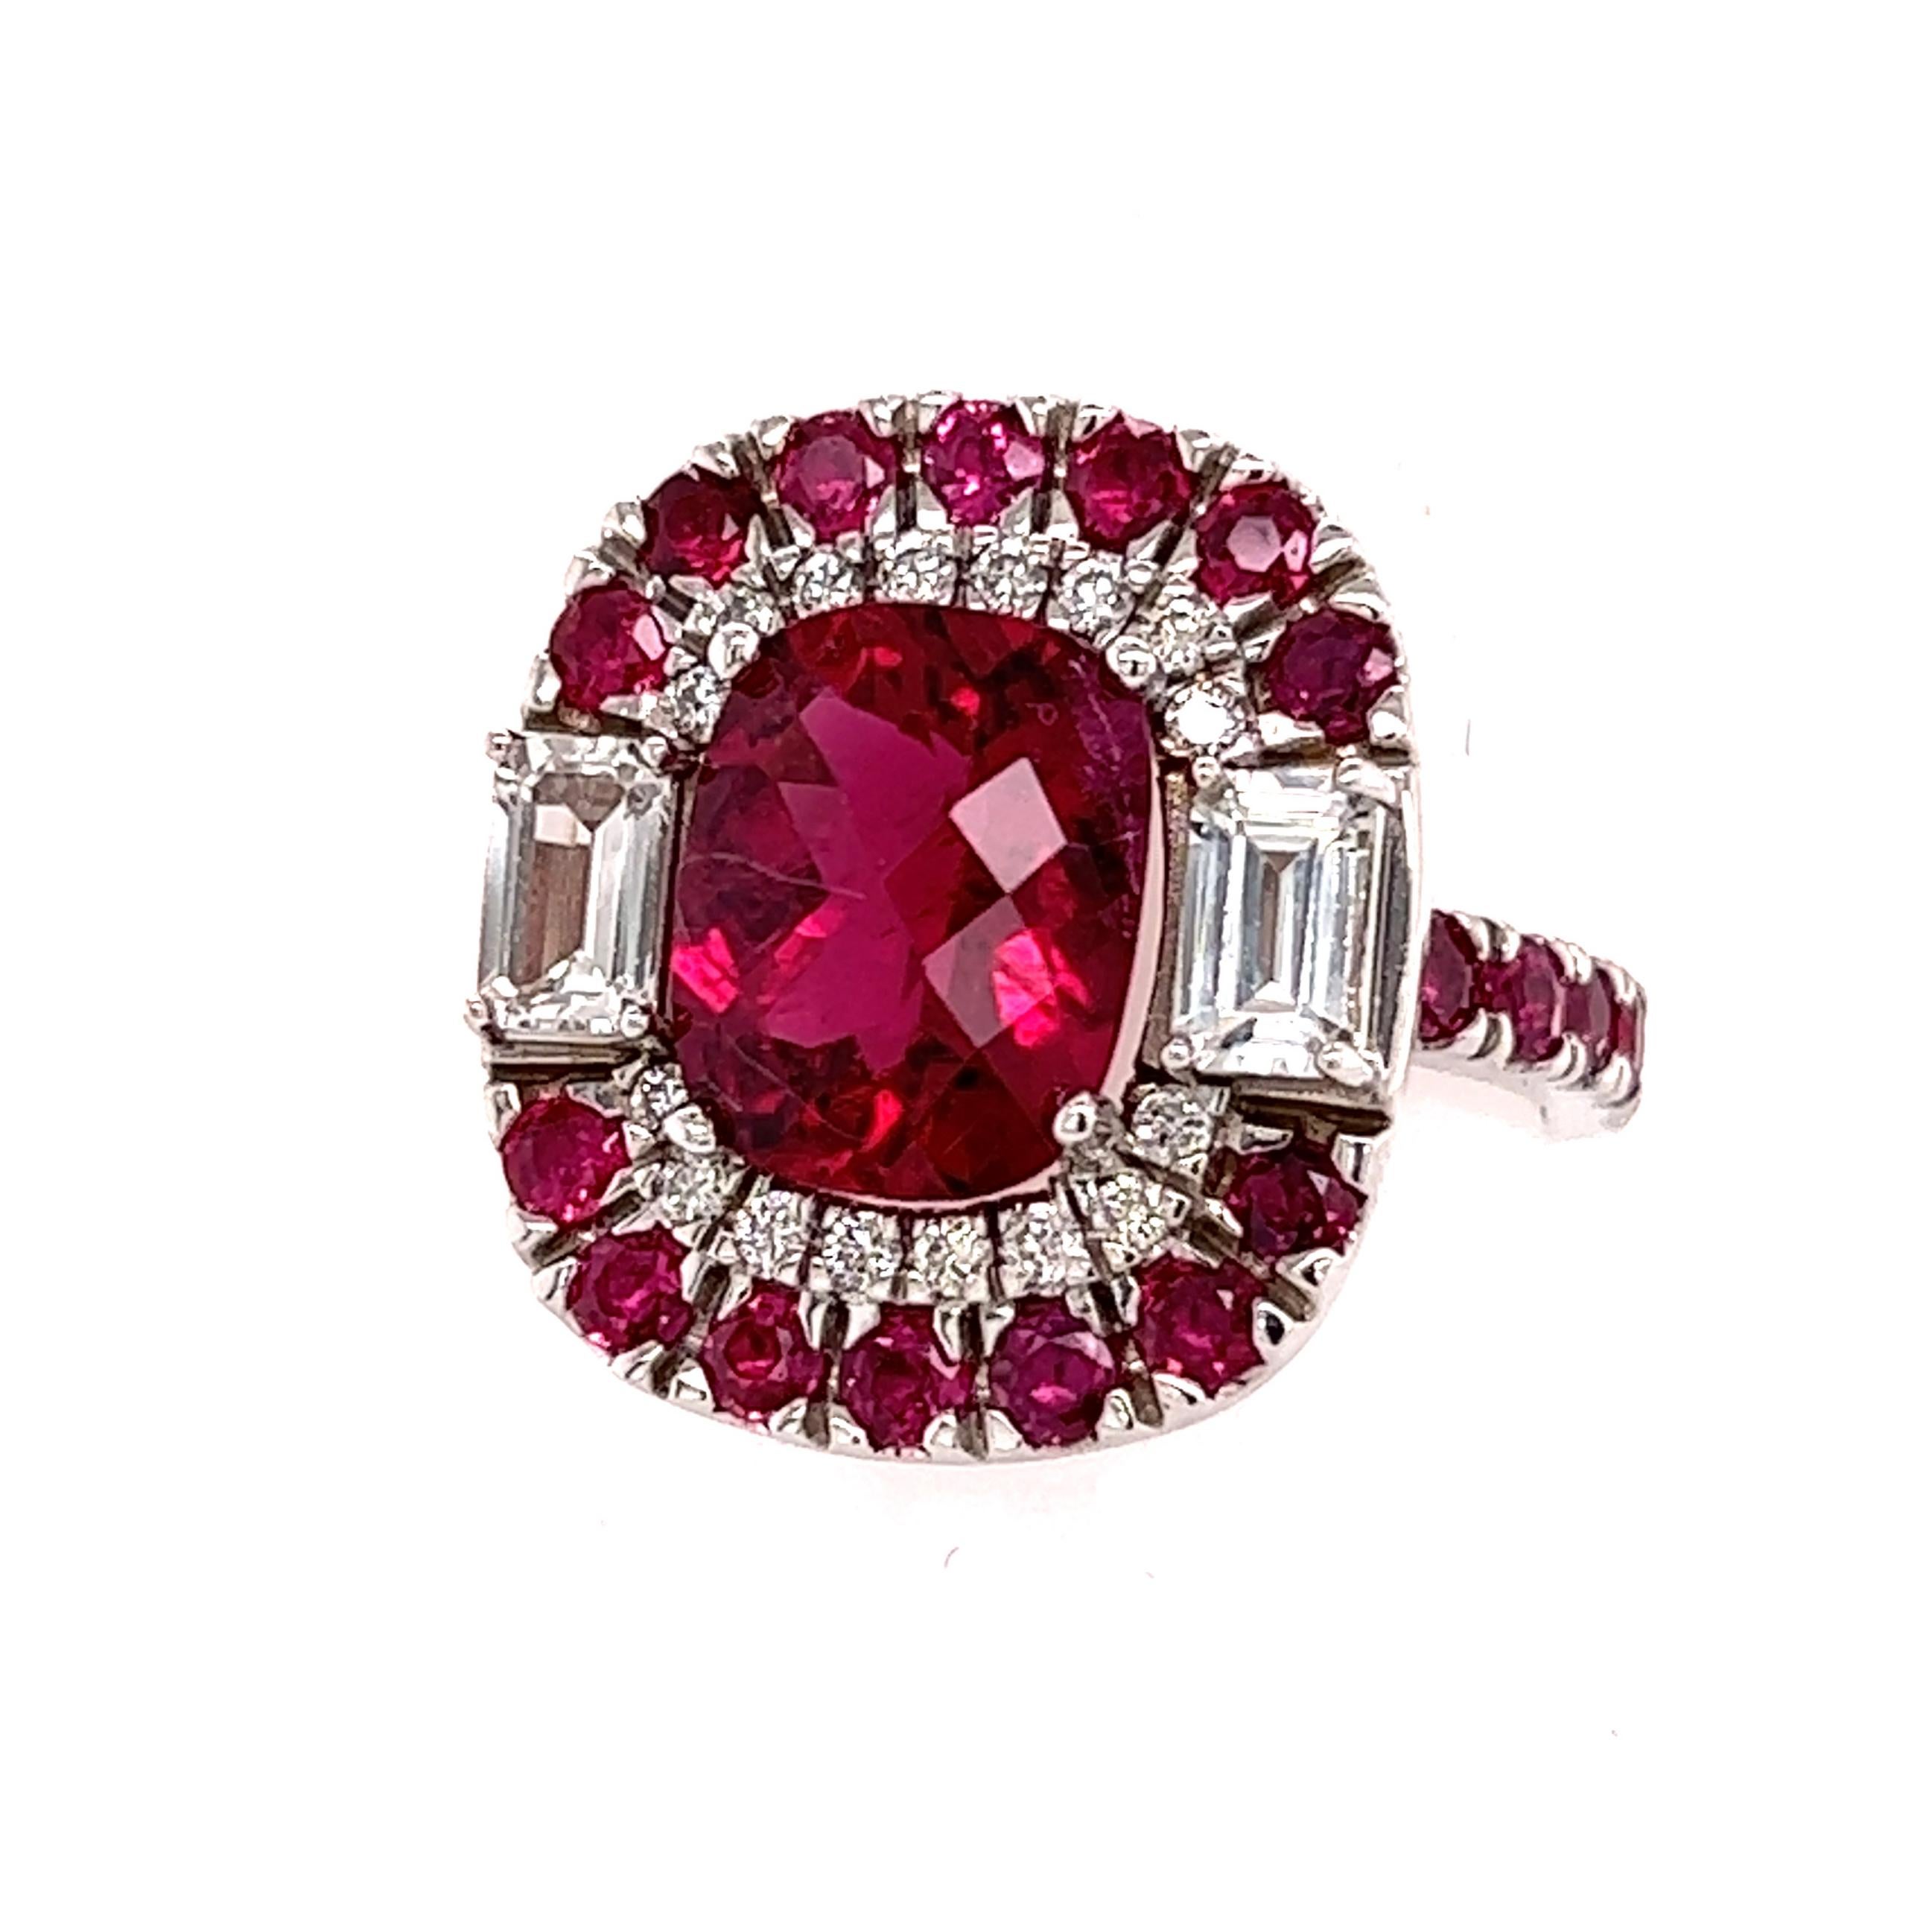 Cushion Cut Tourmaline Ruby Sapphire Diamond Ring 14k Gold 5.1 TCW GIA Certified For Sale